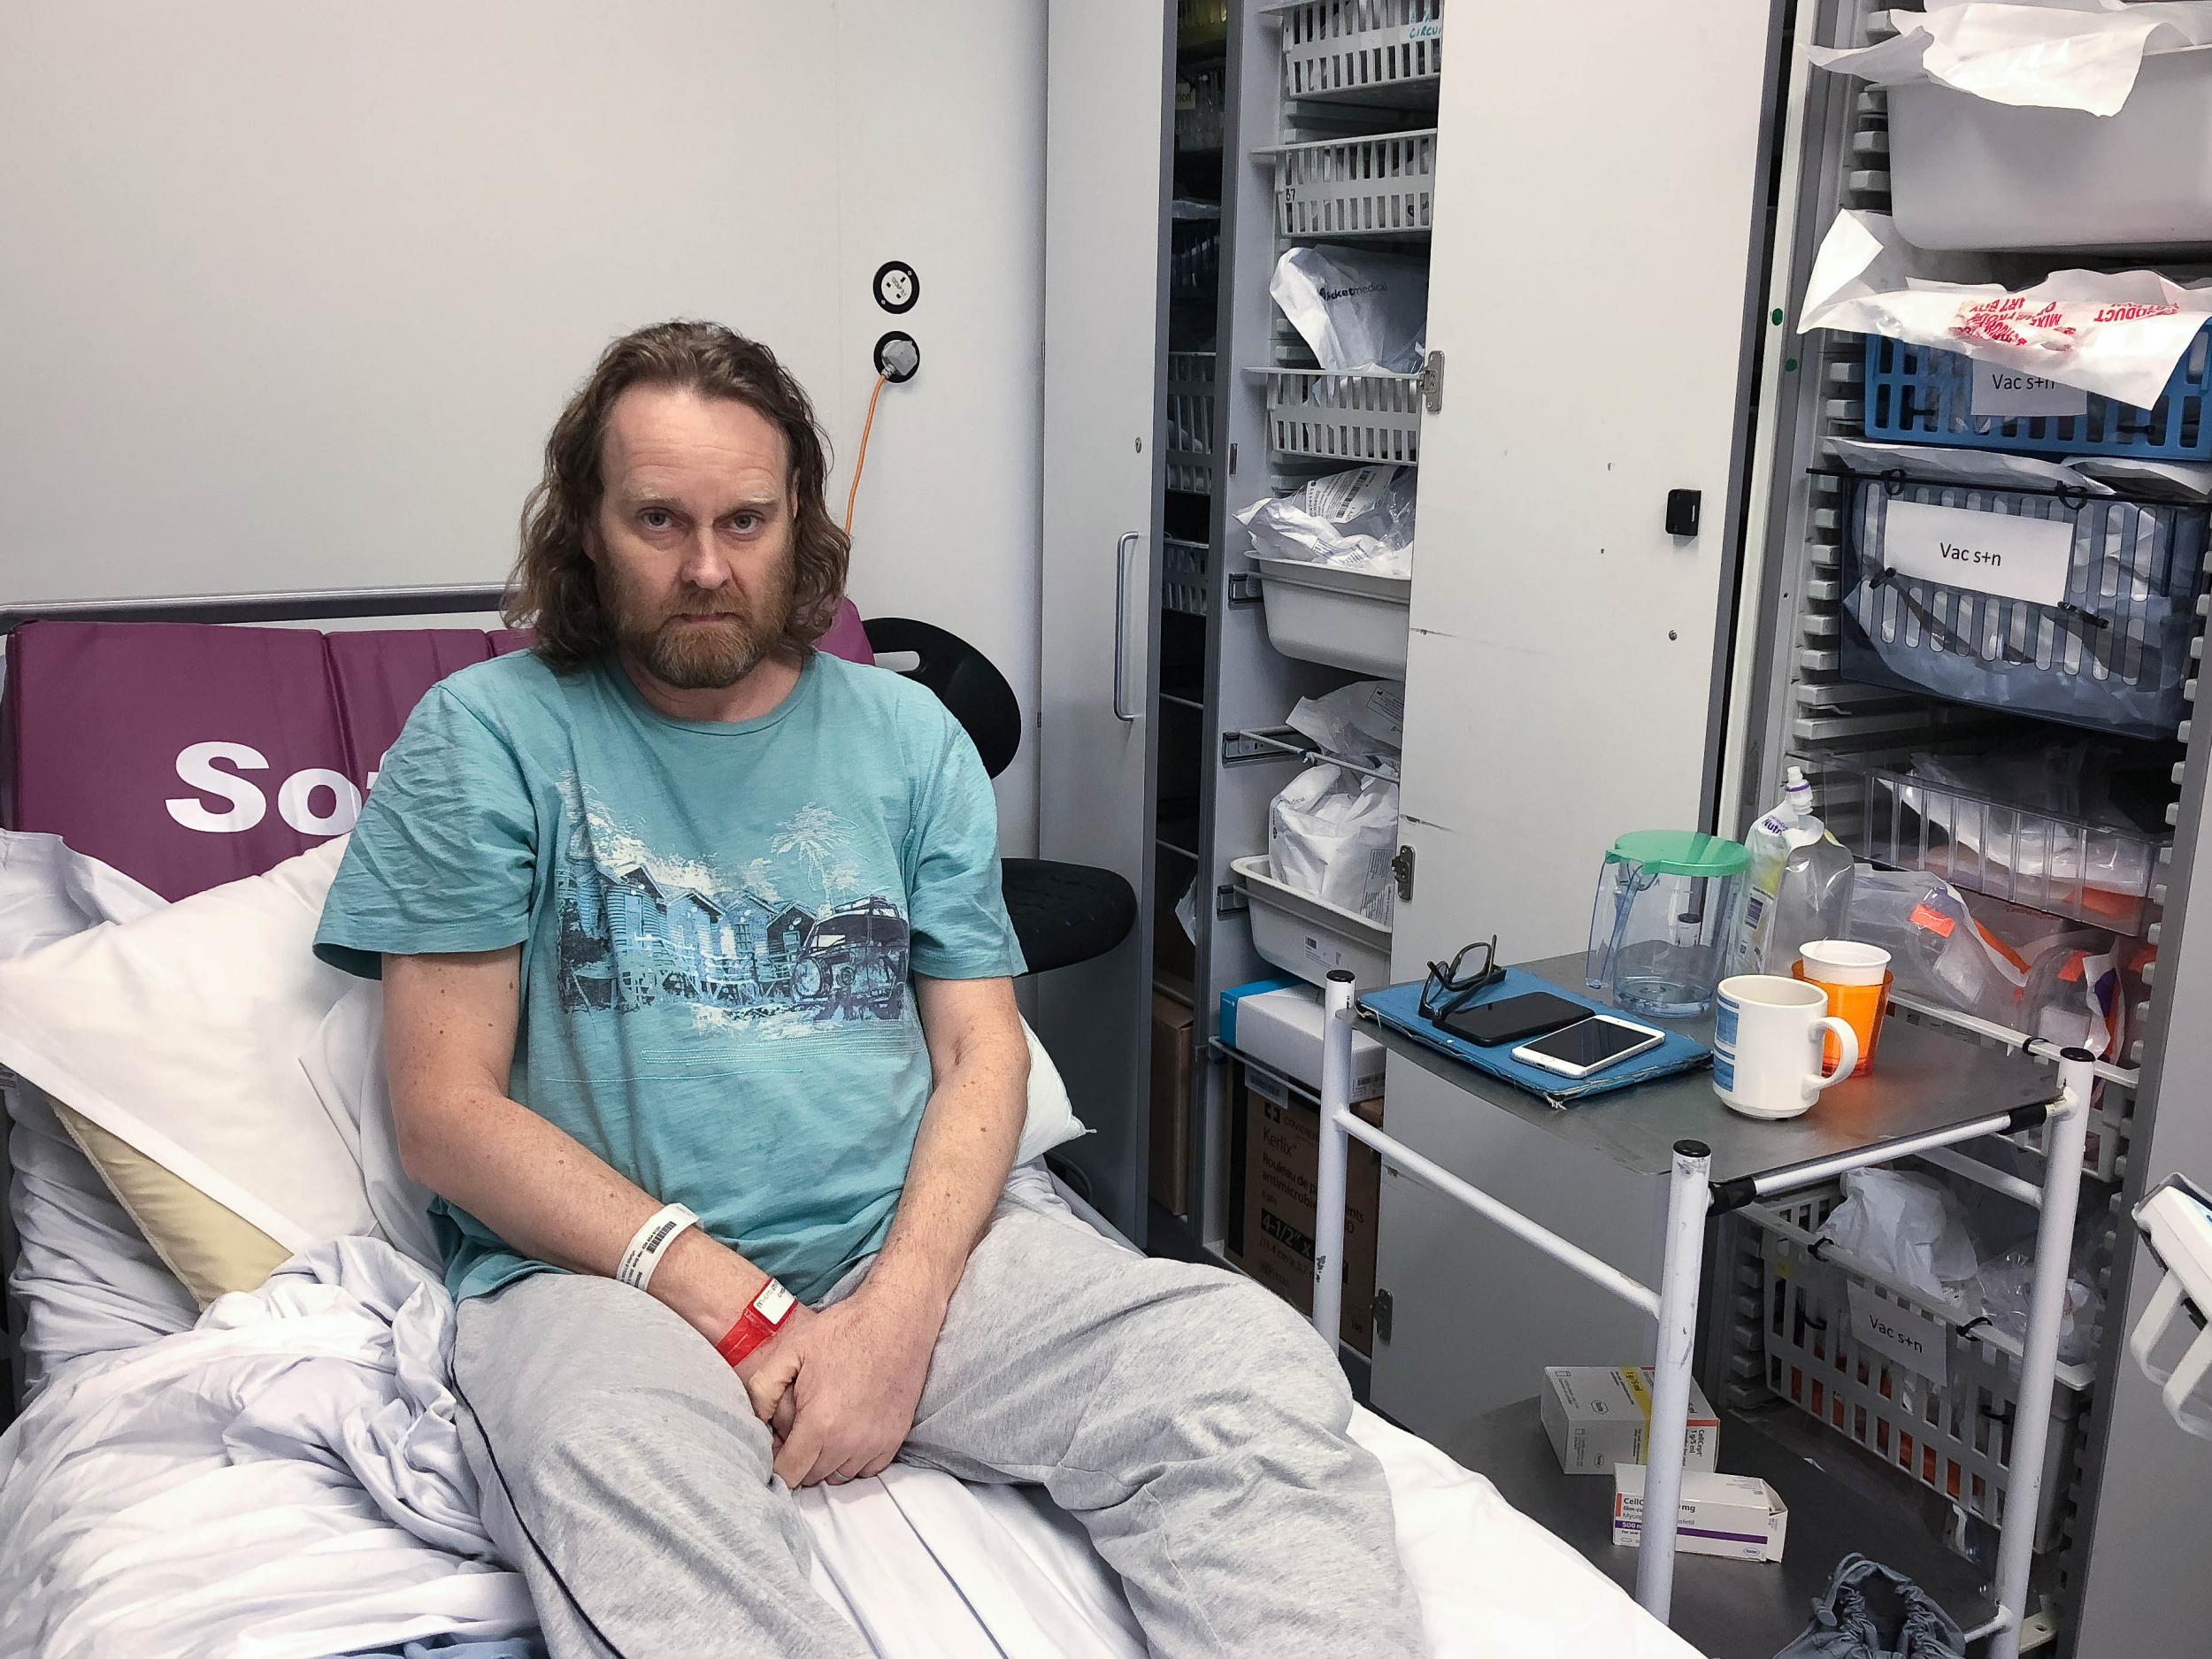 Mr Wells underwent surgery at the Queen Elizabeth Hospital in Birmingham